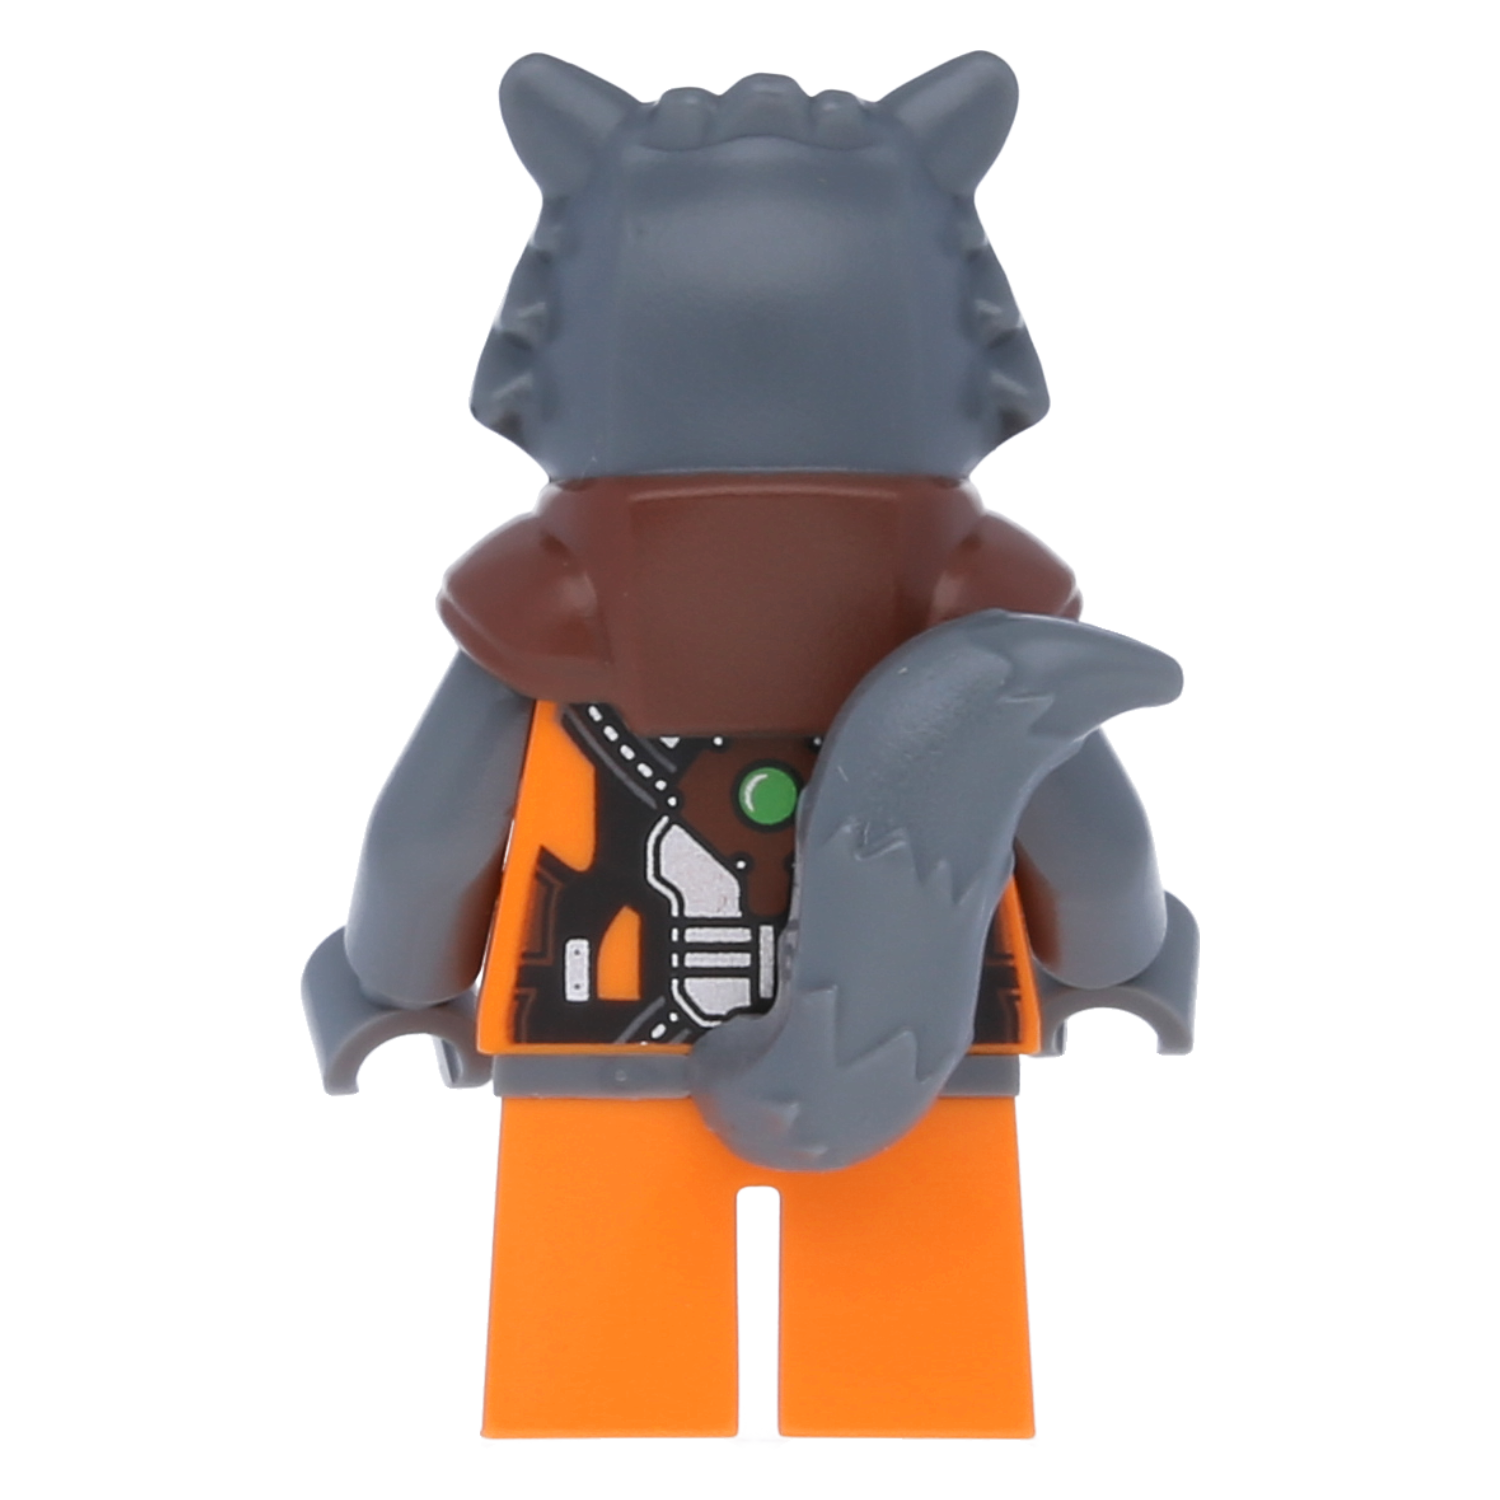 LEGO superhero mini figure - Rocket Raccoon (Oranges Outfit)